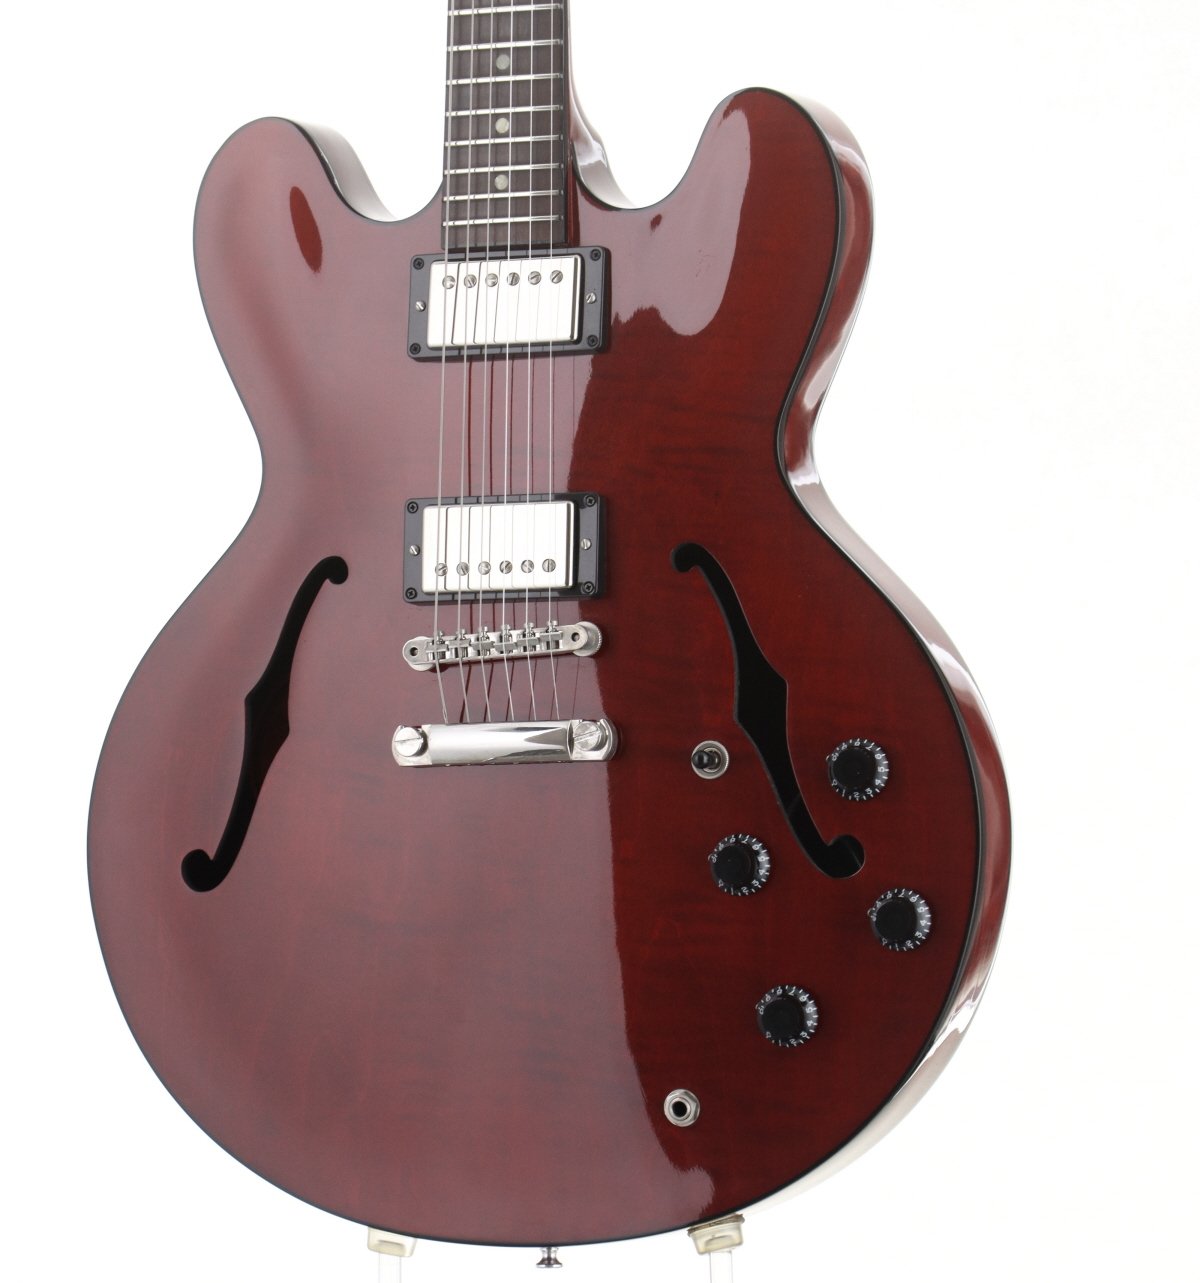 [SN 10486753] USED GIBSON MEMPHIS / ES-335 Studio Wine Red [3.75kg/2016] Gibson Semi-Aco ES335 Electric Guitar [08]